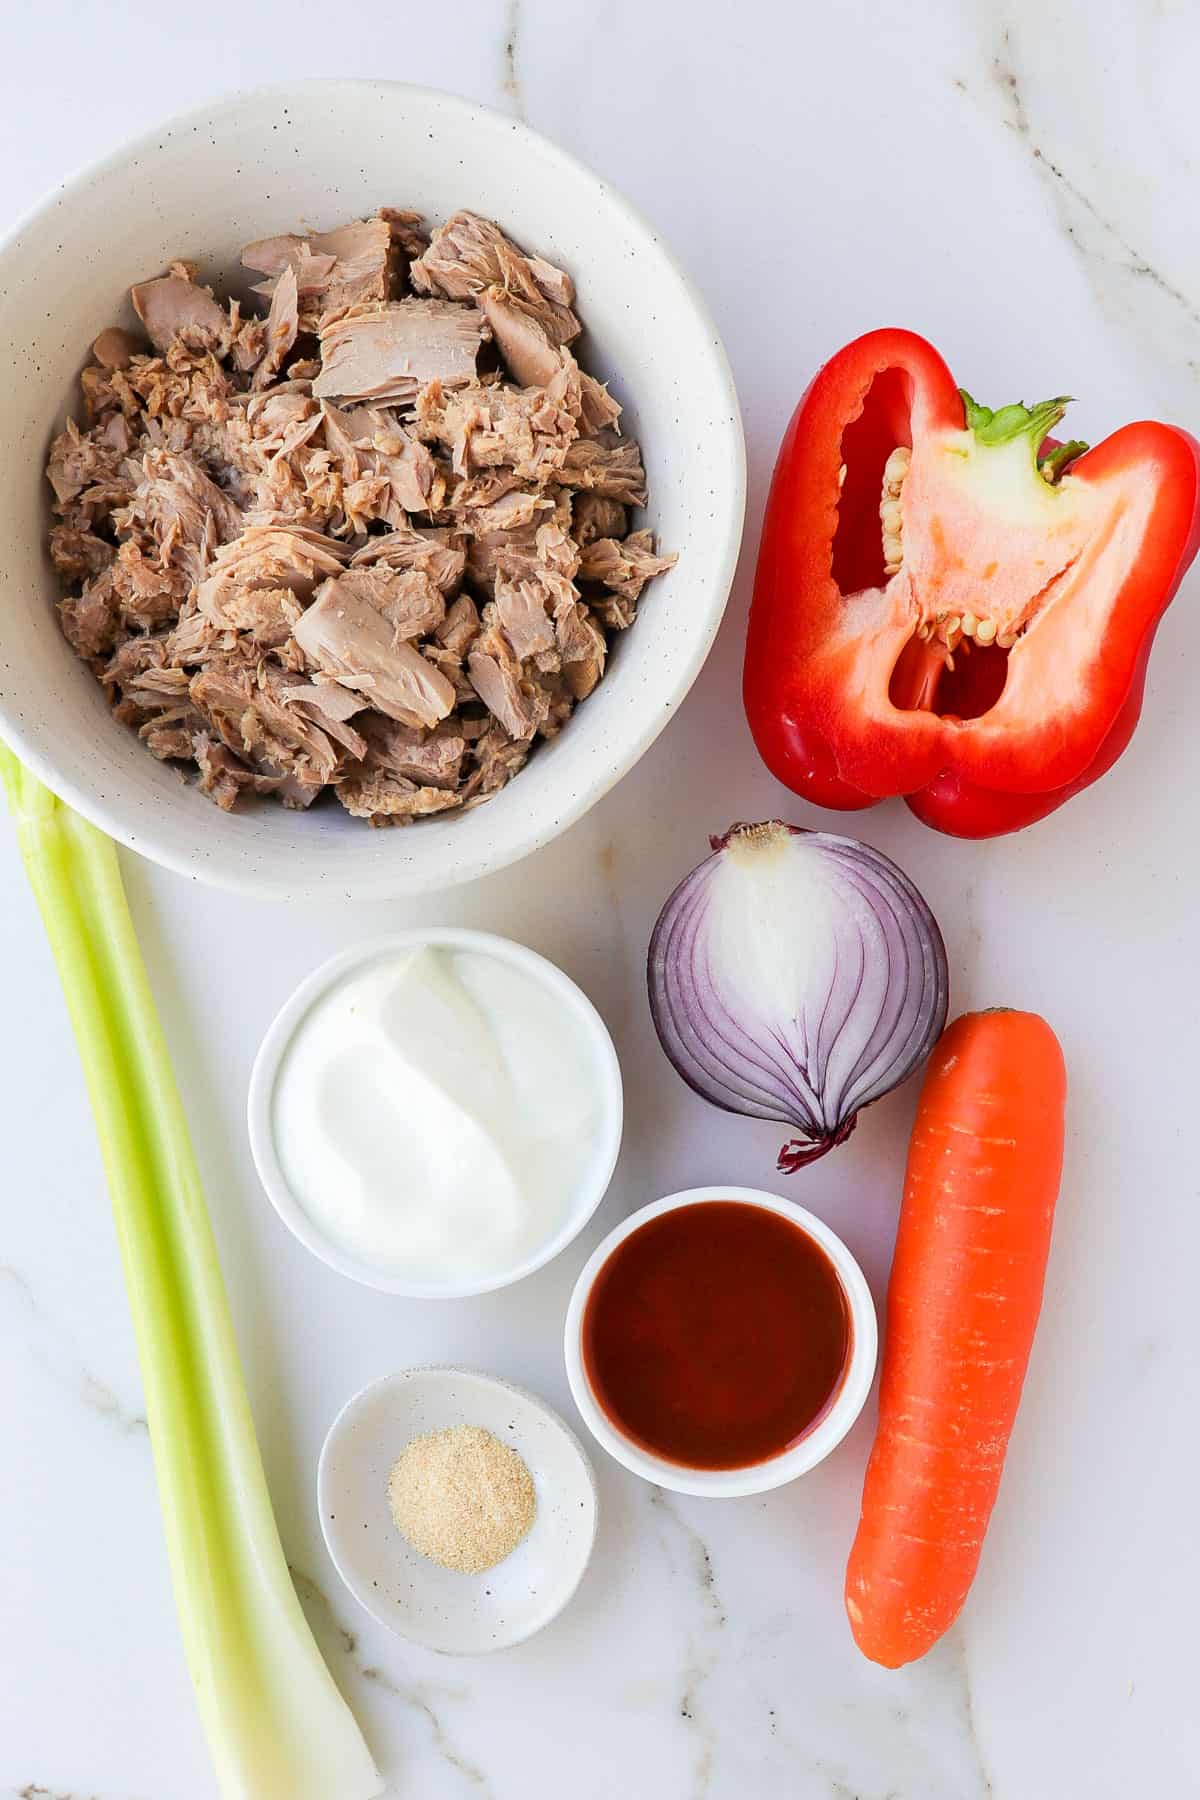 Ingredients shown to make buffalo tuna salad.